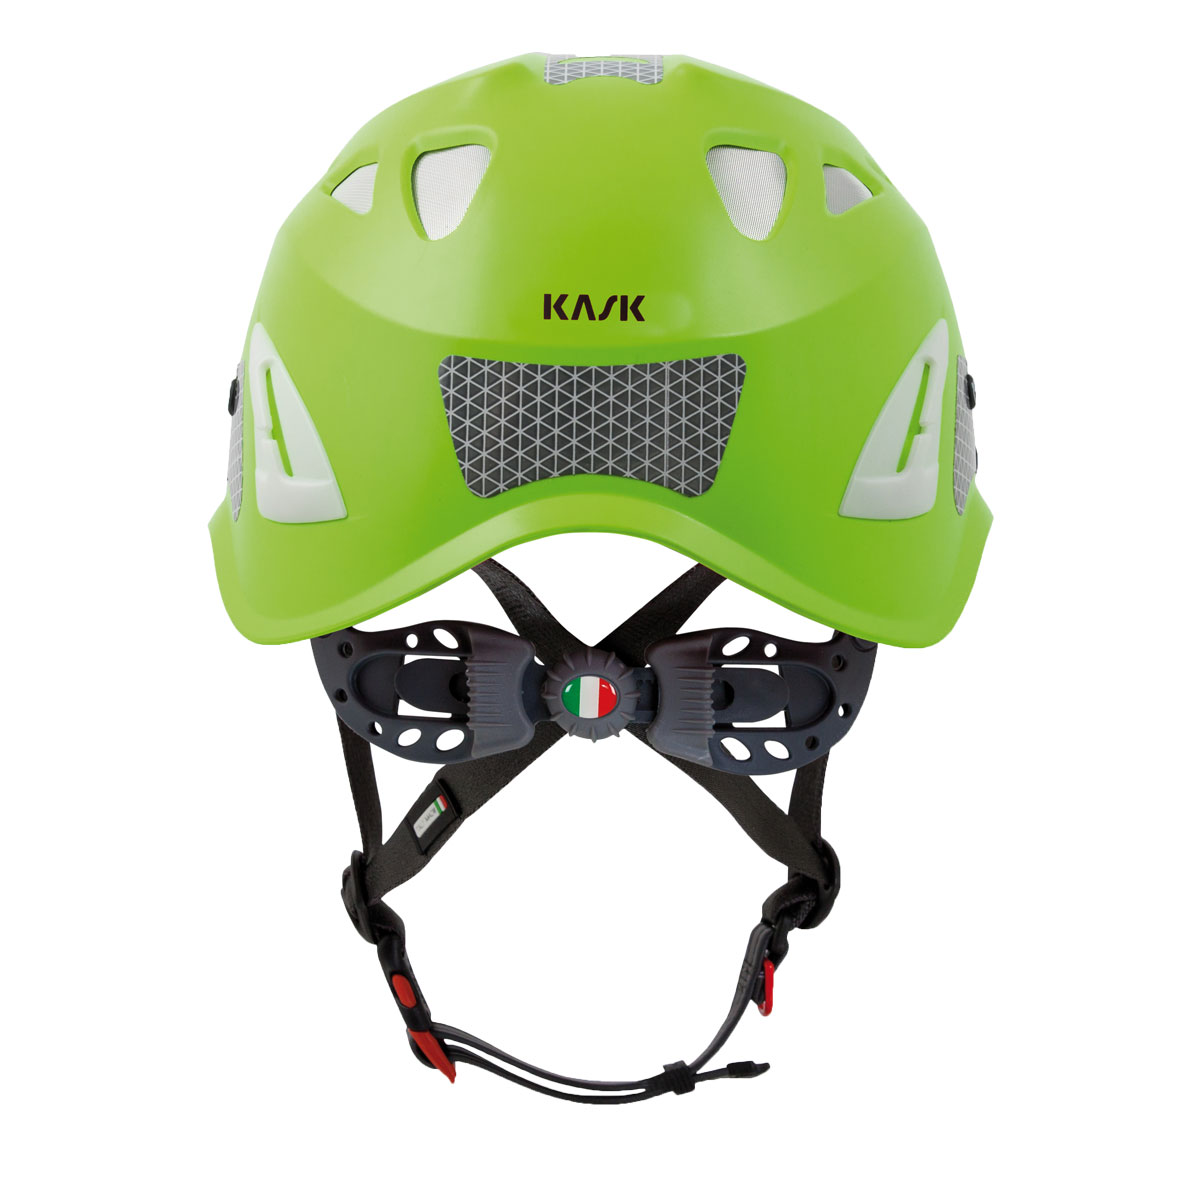 Kask Super Plasma Hi-Viz Helmet | Gravitec Systems Inc.